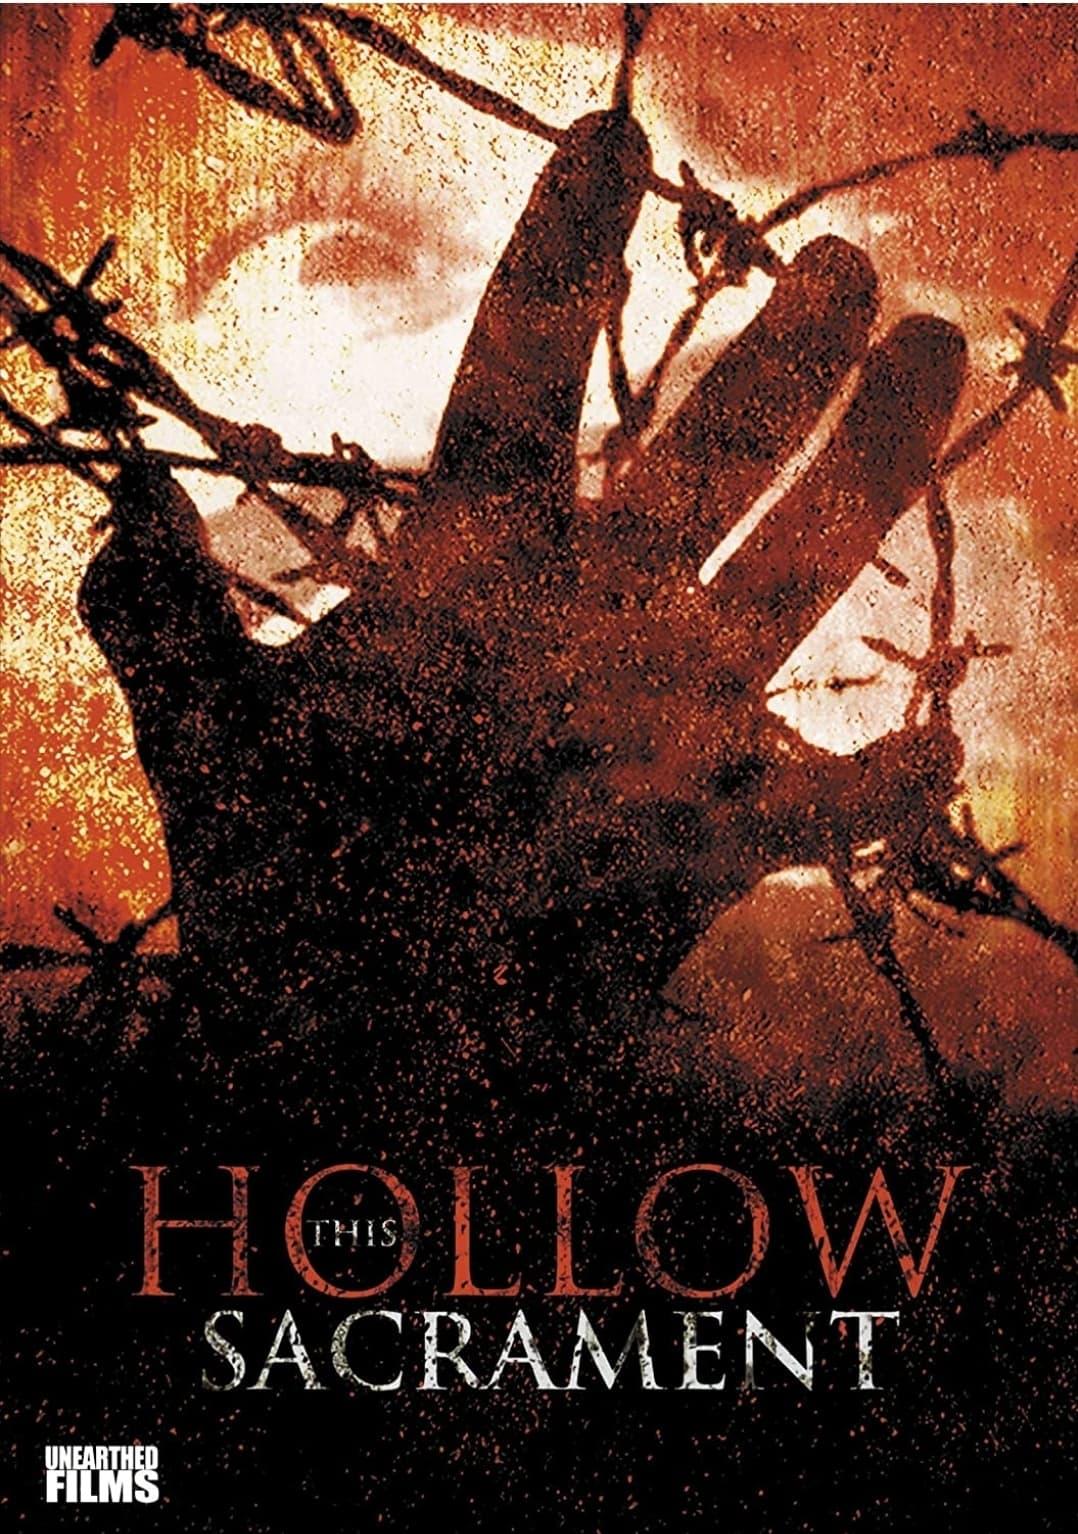 This Hollow Sacrament poster